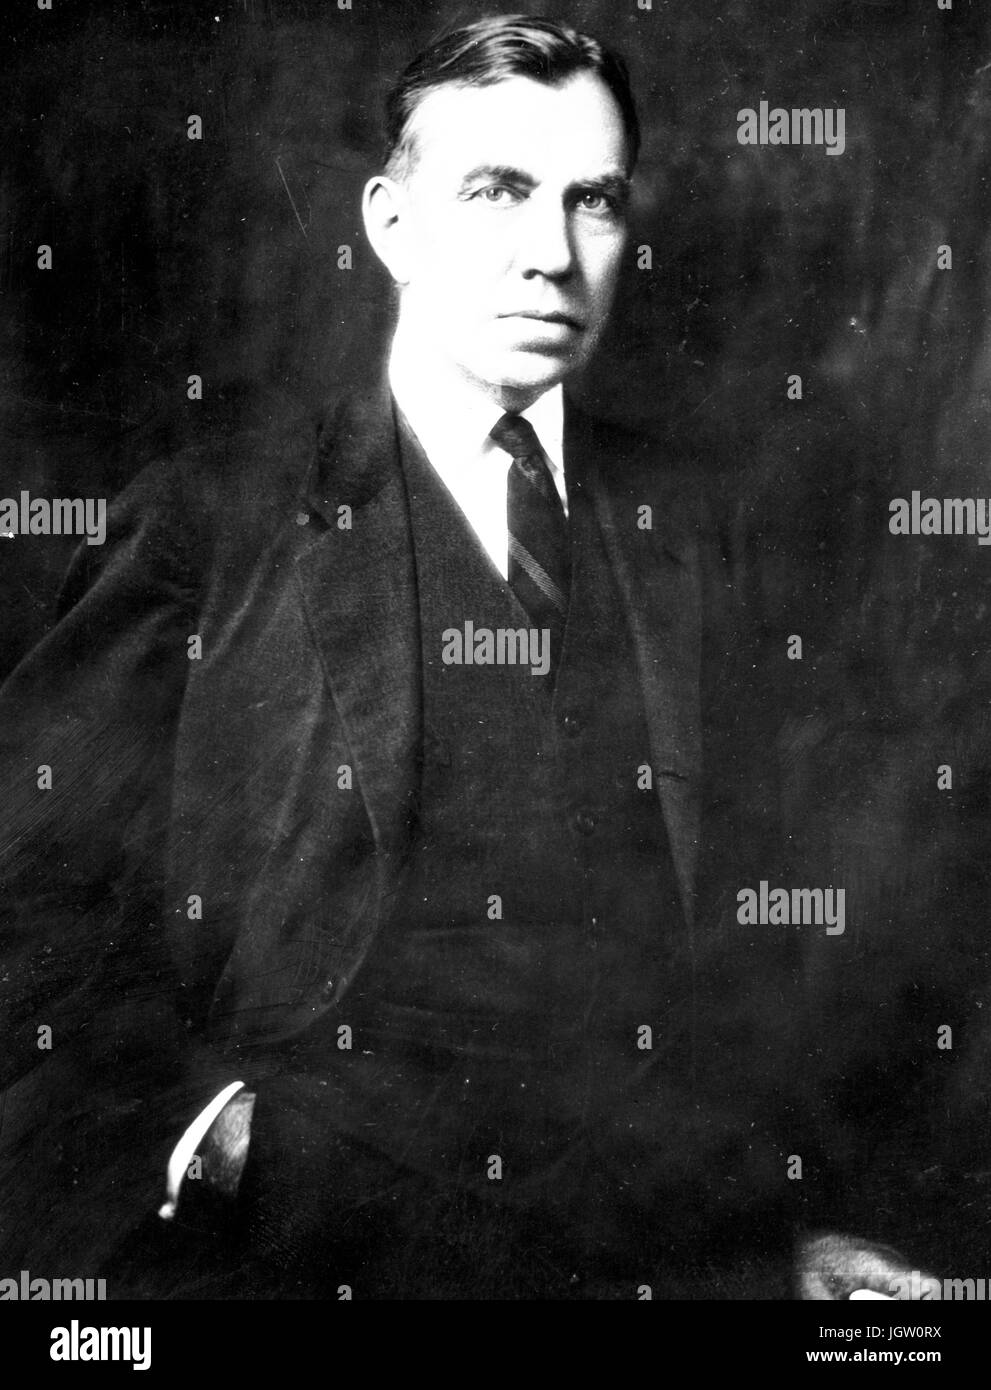 Halblanger ständigen Porträt des Professor und pädagogische Administrator John Huston Finley, 1925. Stockfoto